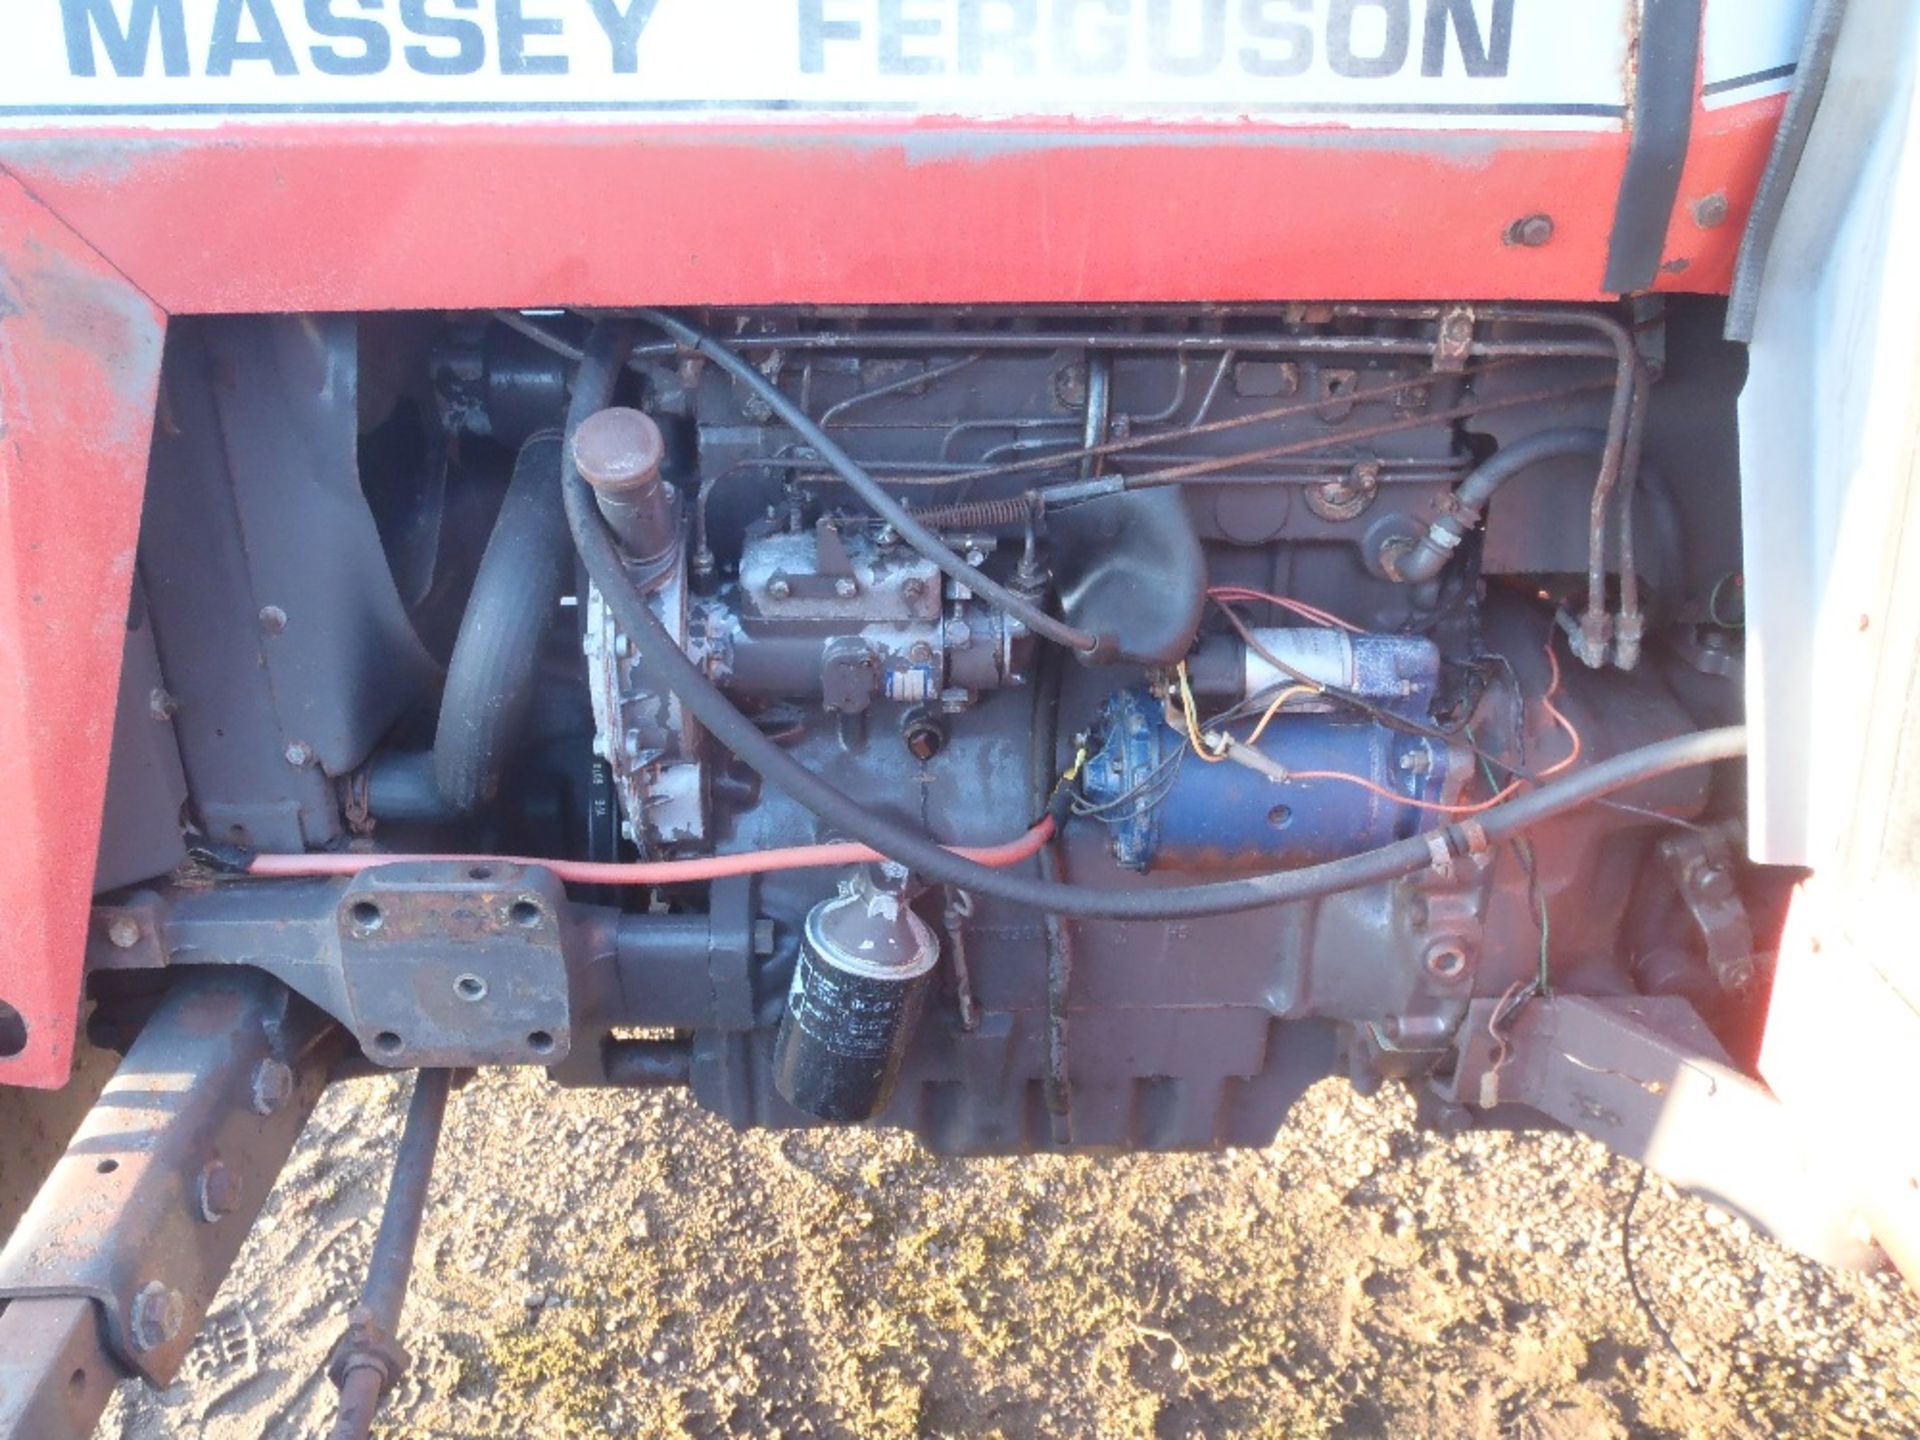 Massey Ferguson 290 2wd Tractor - Image 8 of 9